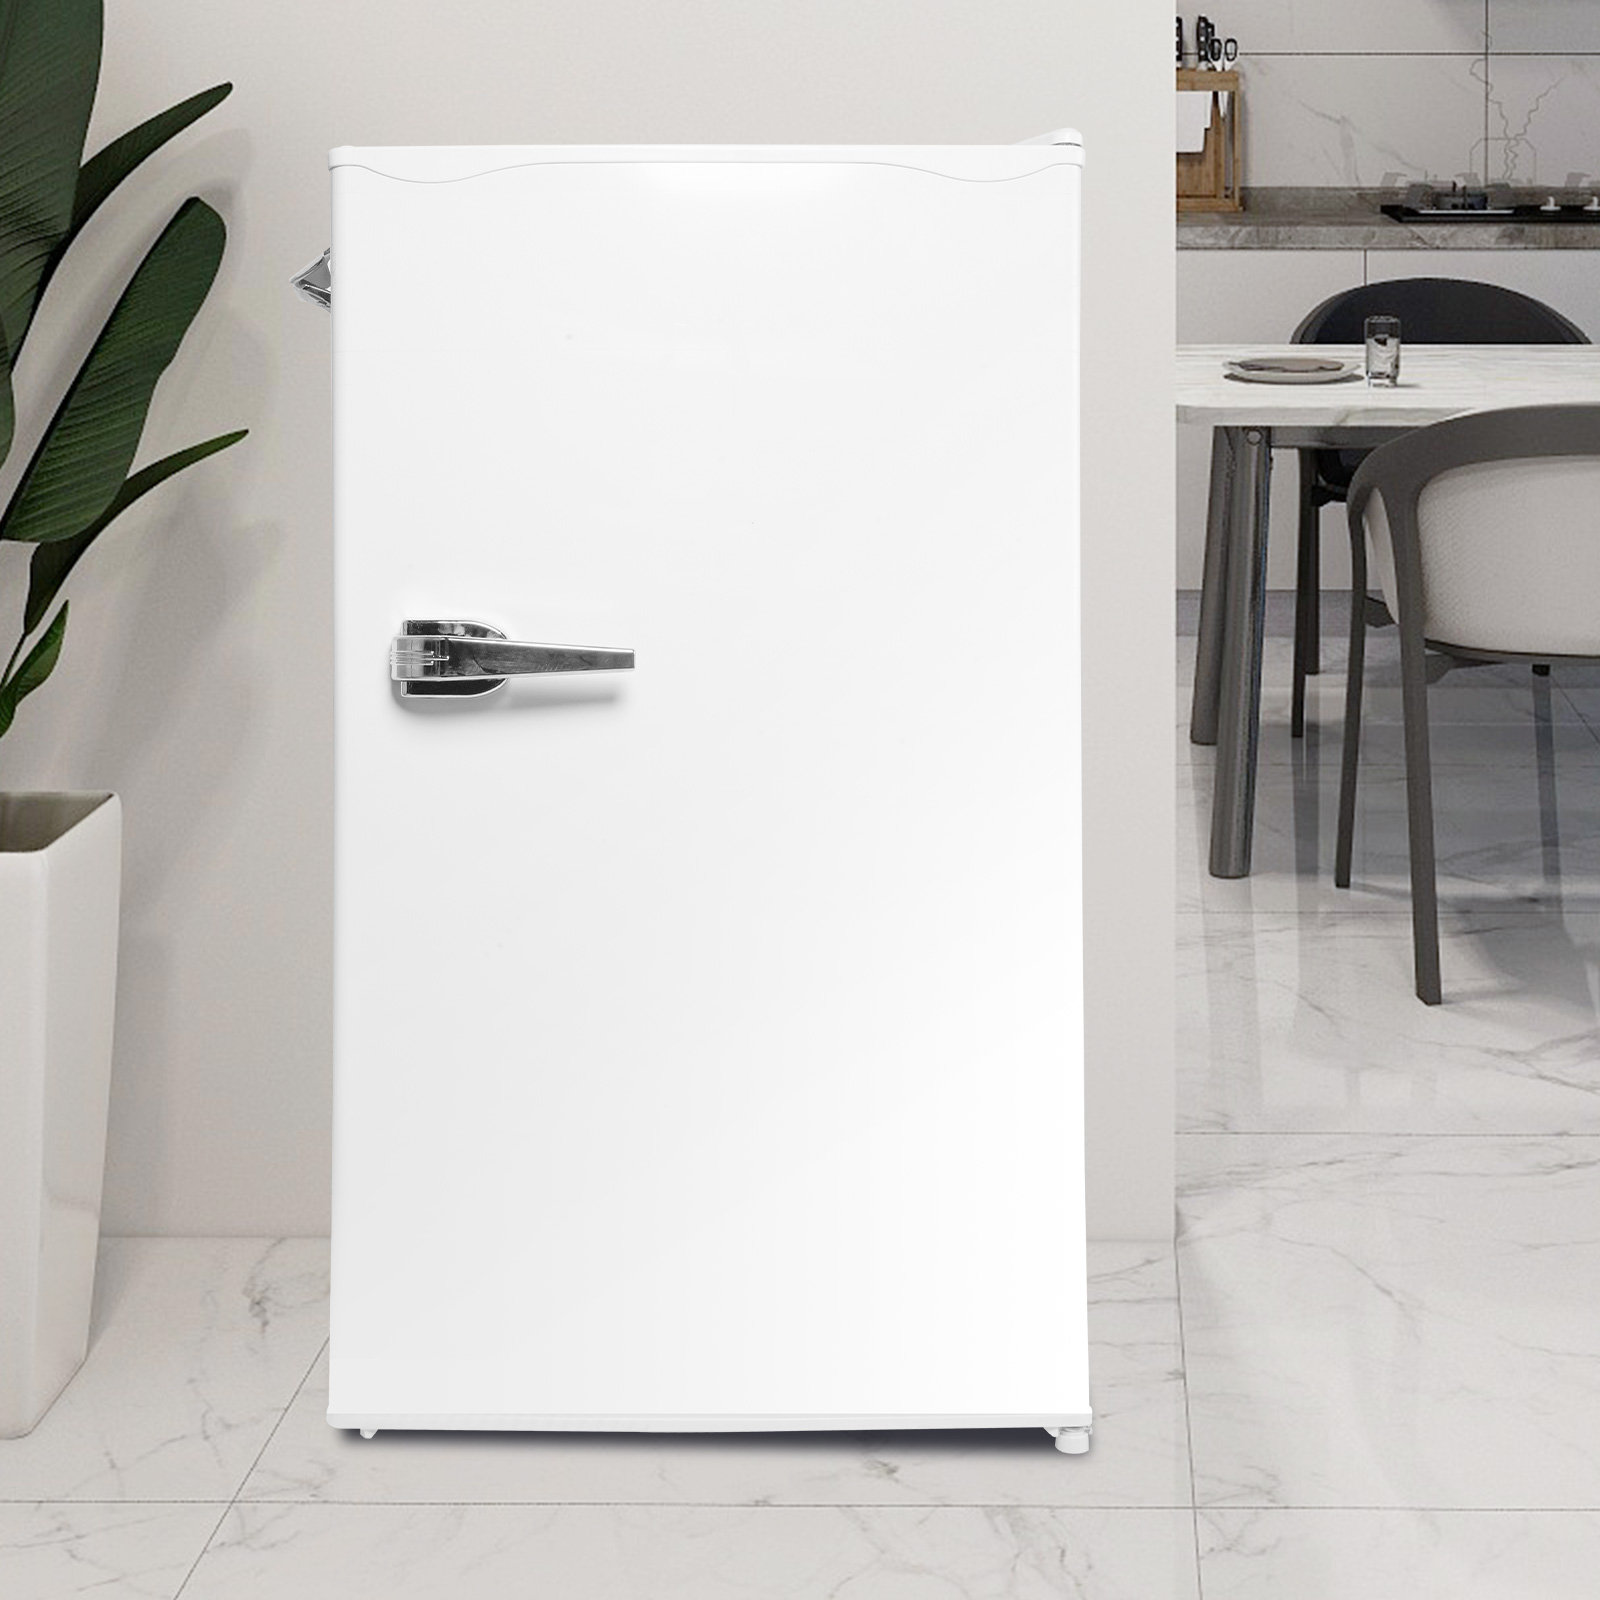 Frigidaire 3.2 Cu. Ft. Single Door Retro Compact Refrigerator